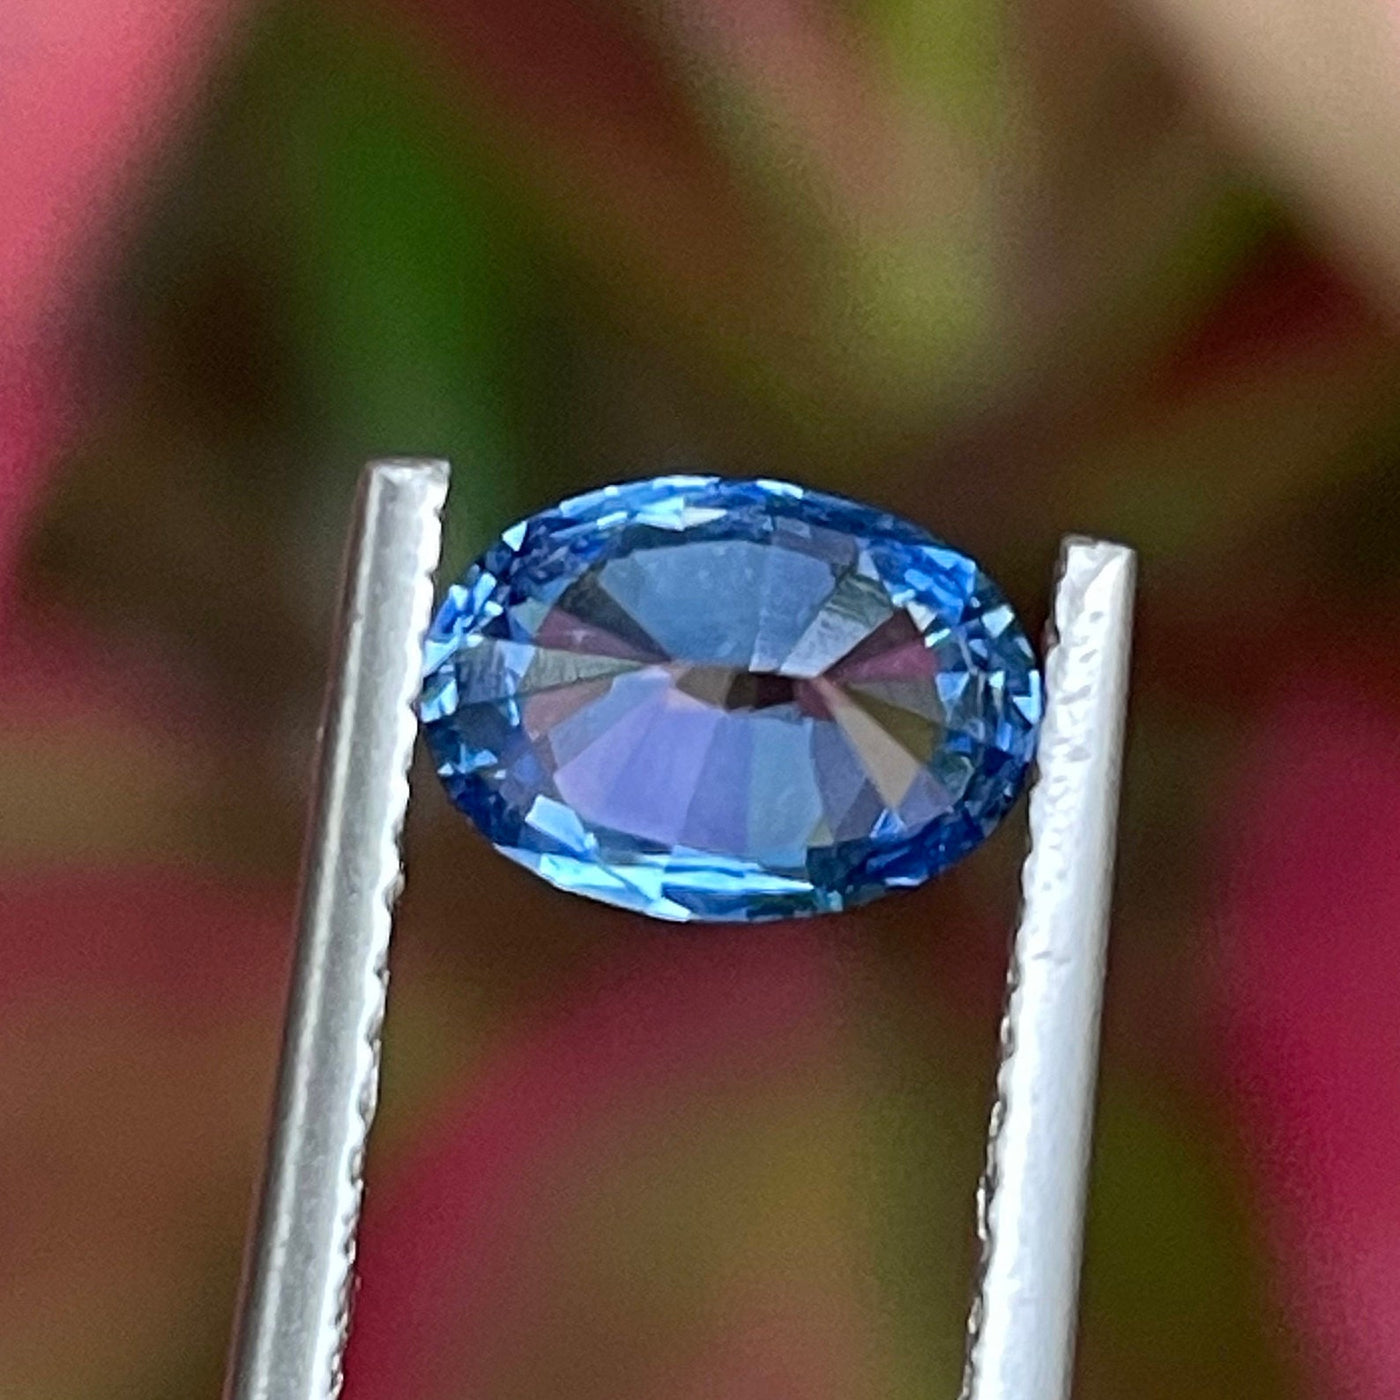 Blue Sapphire 1.22 CT